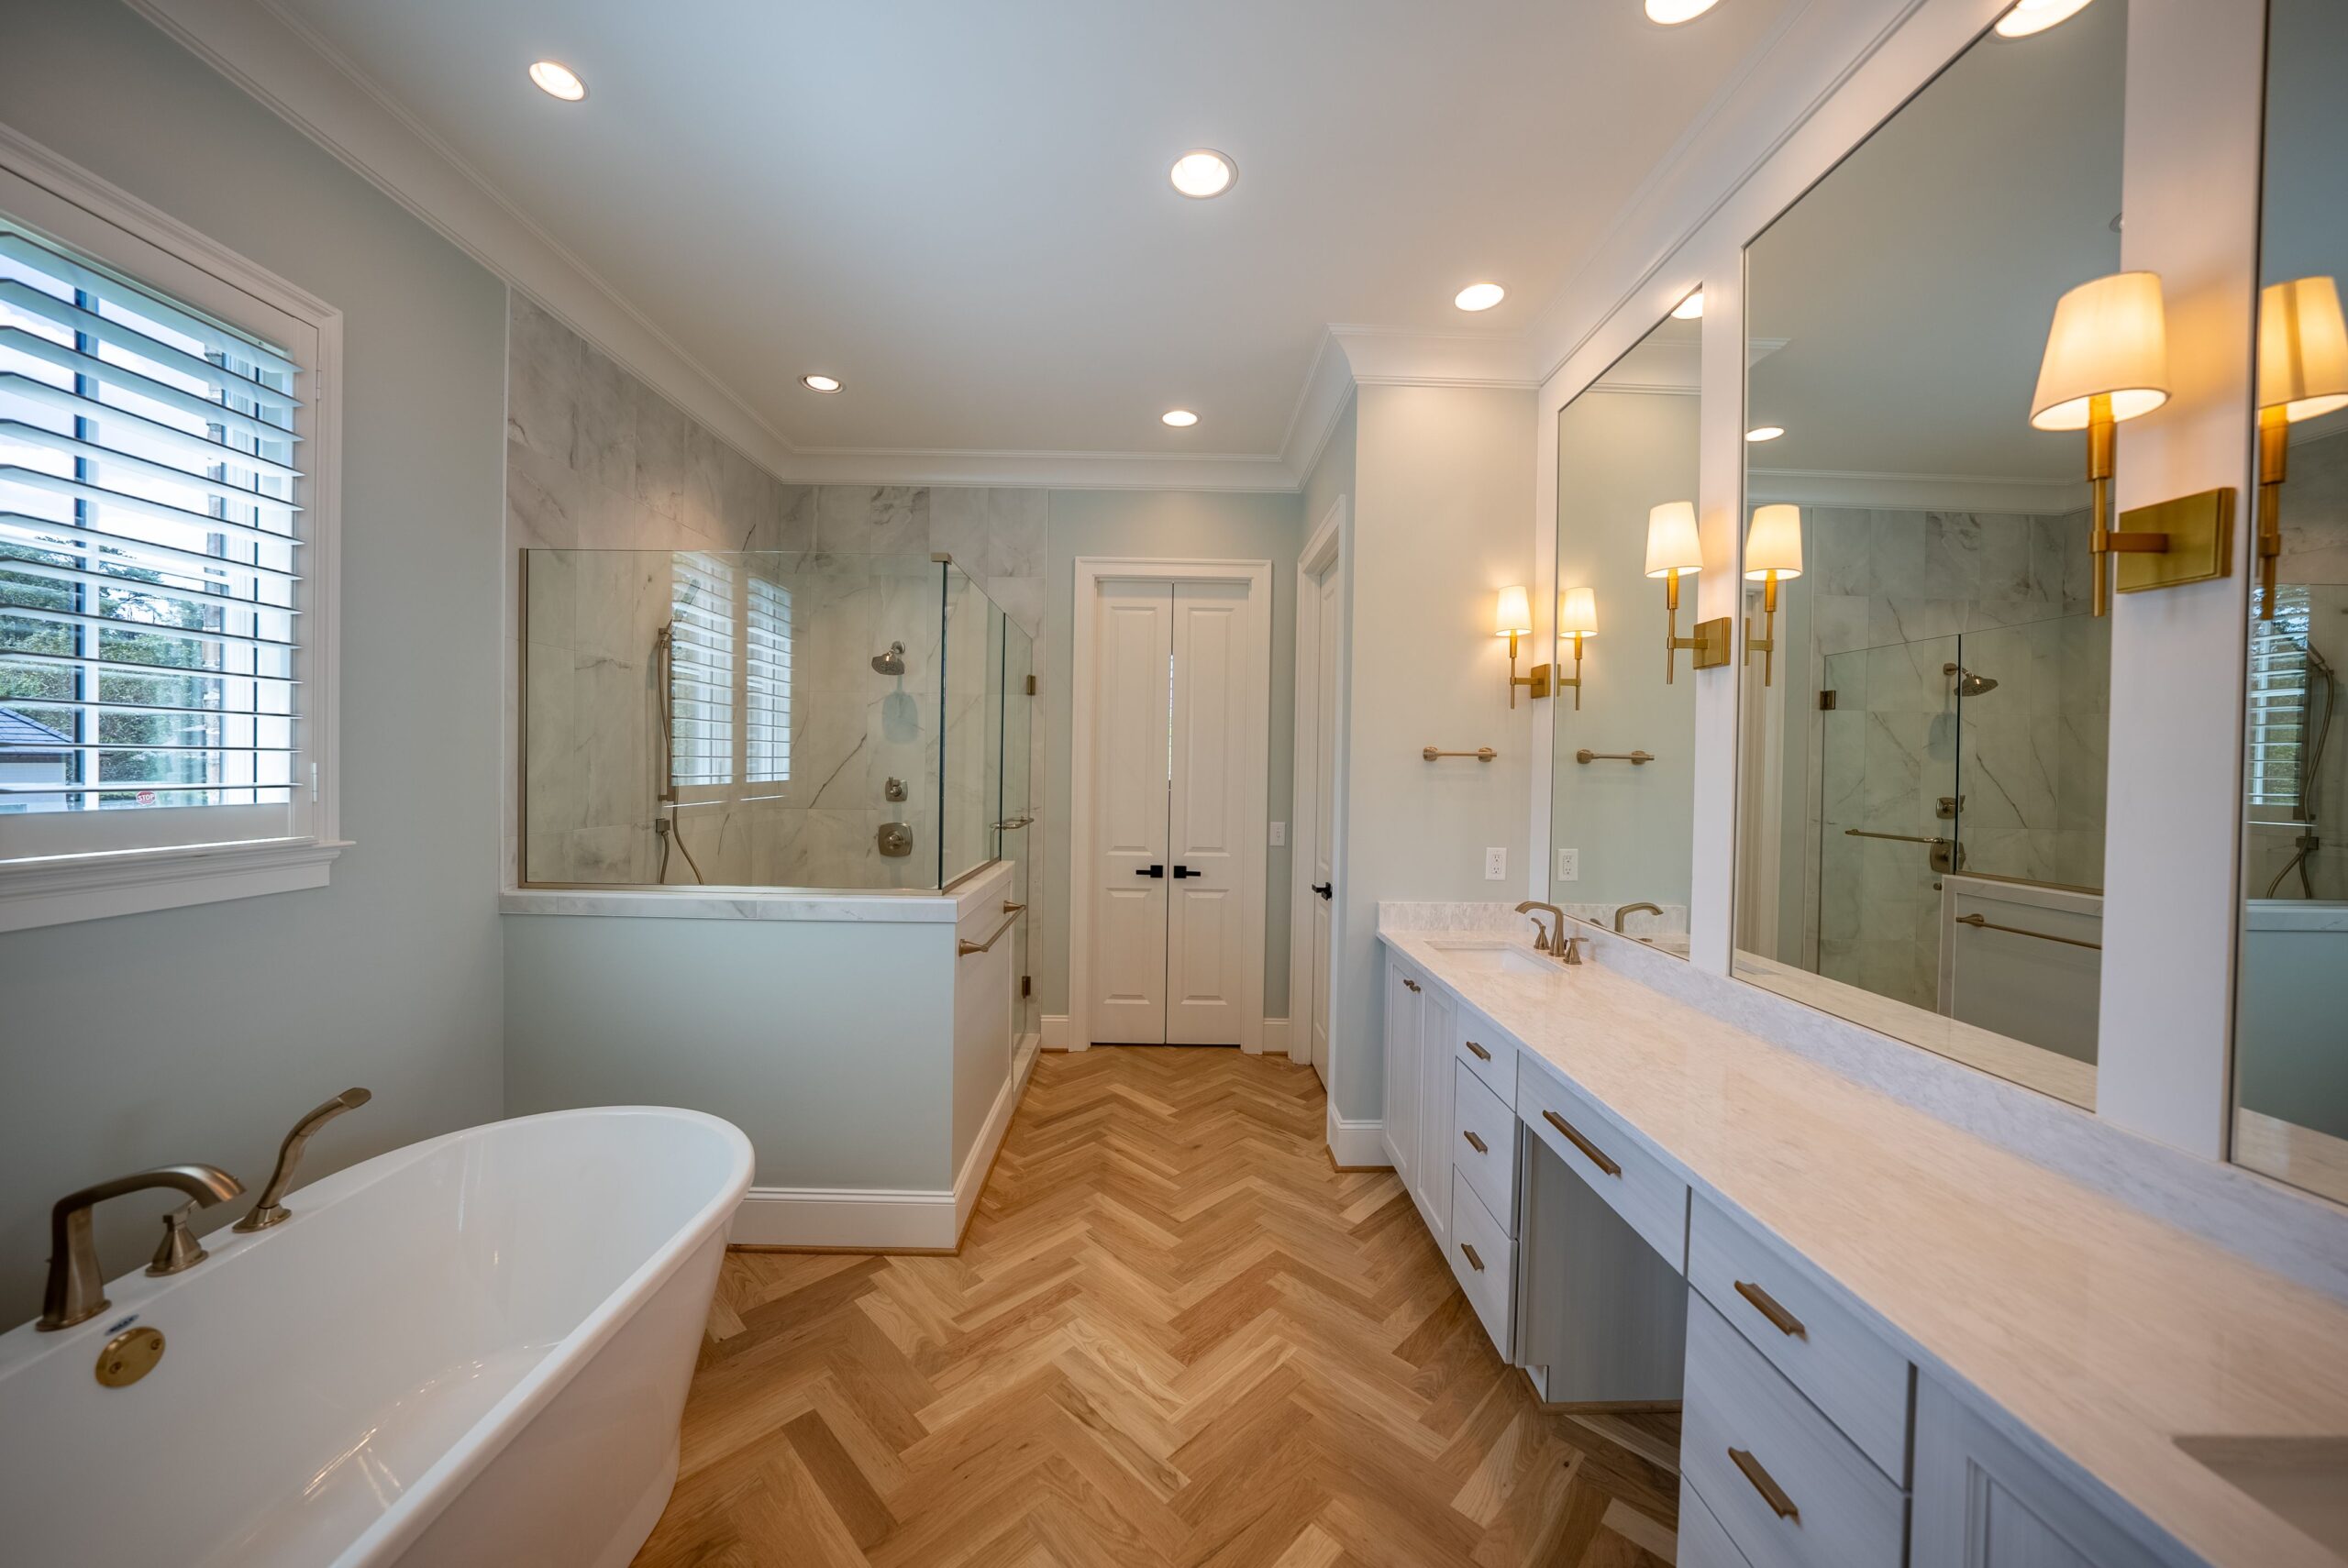 A bathroom with a tub, sink and mirror.